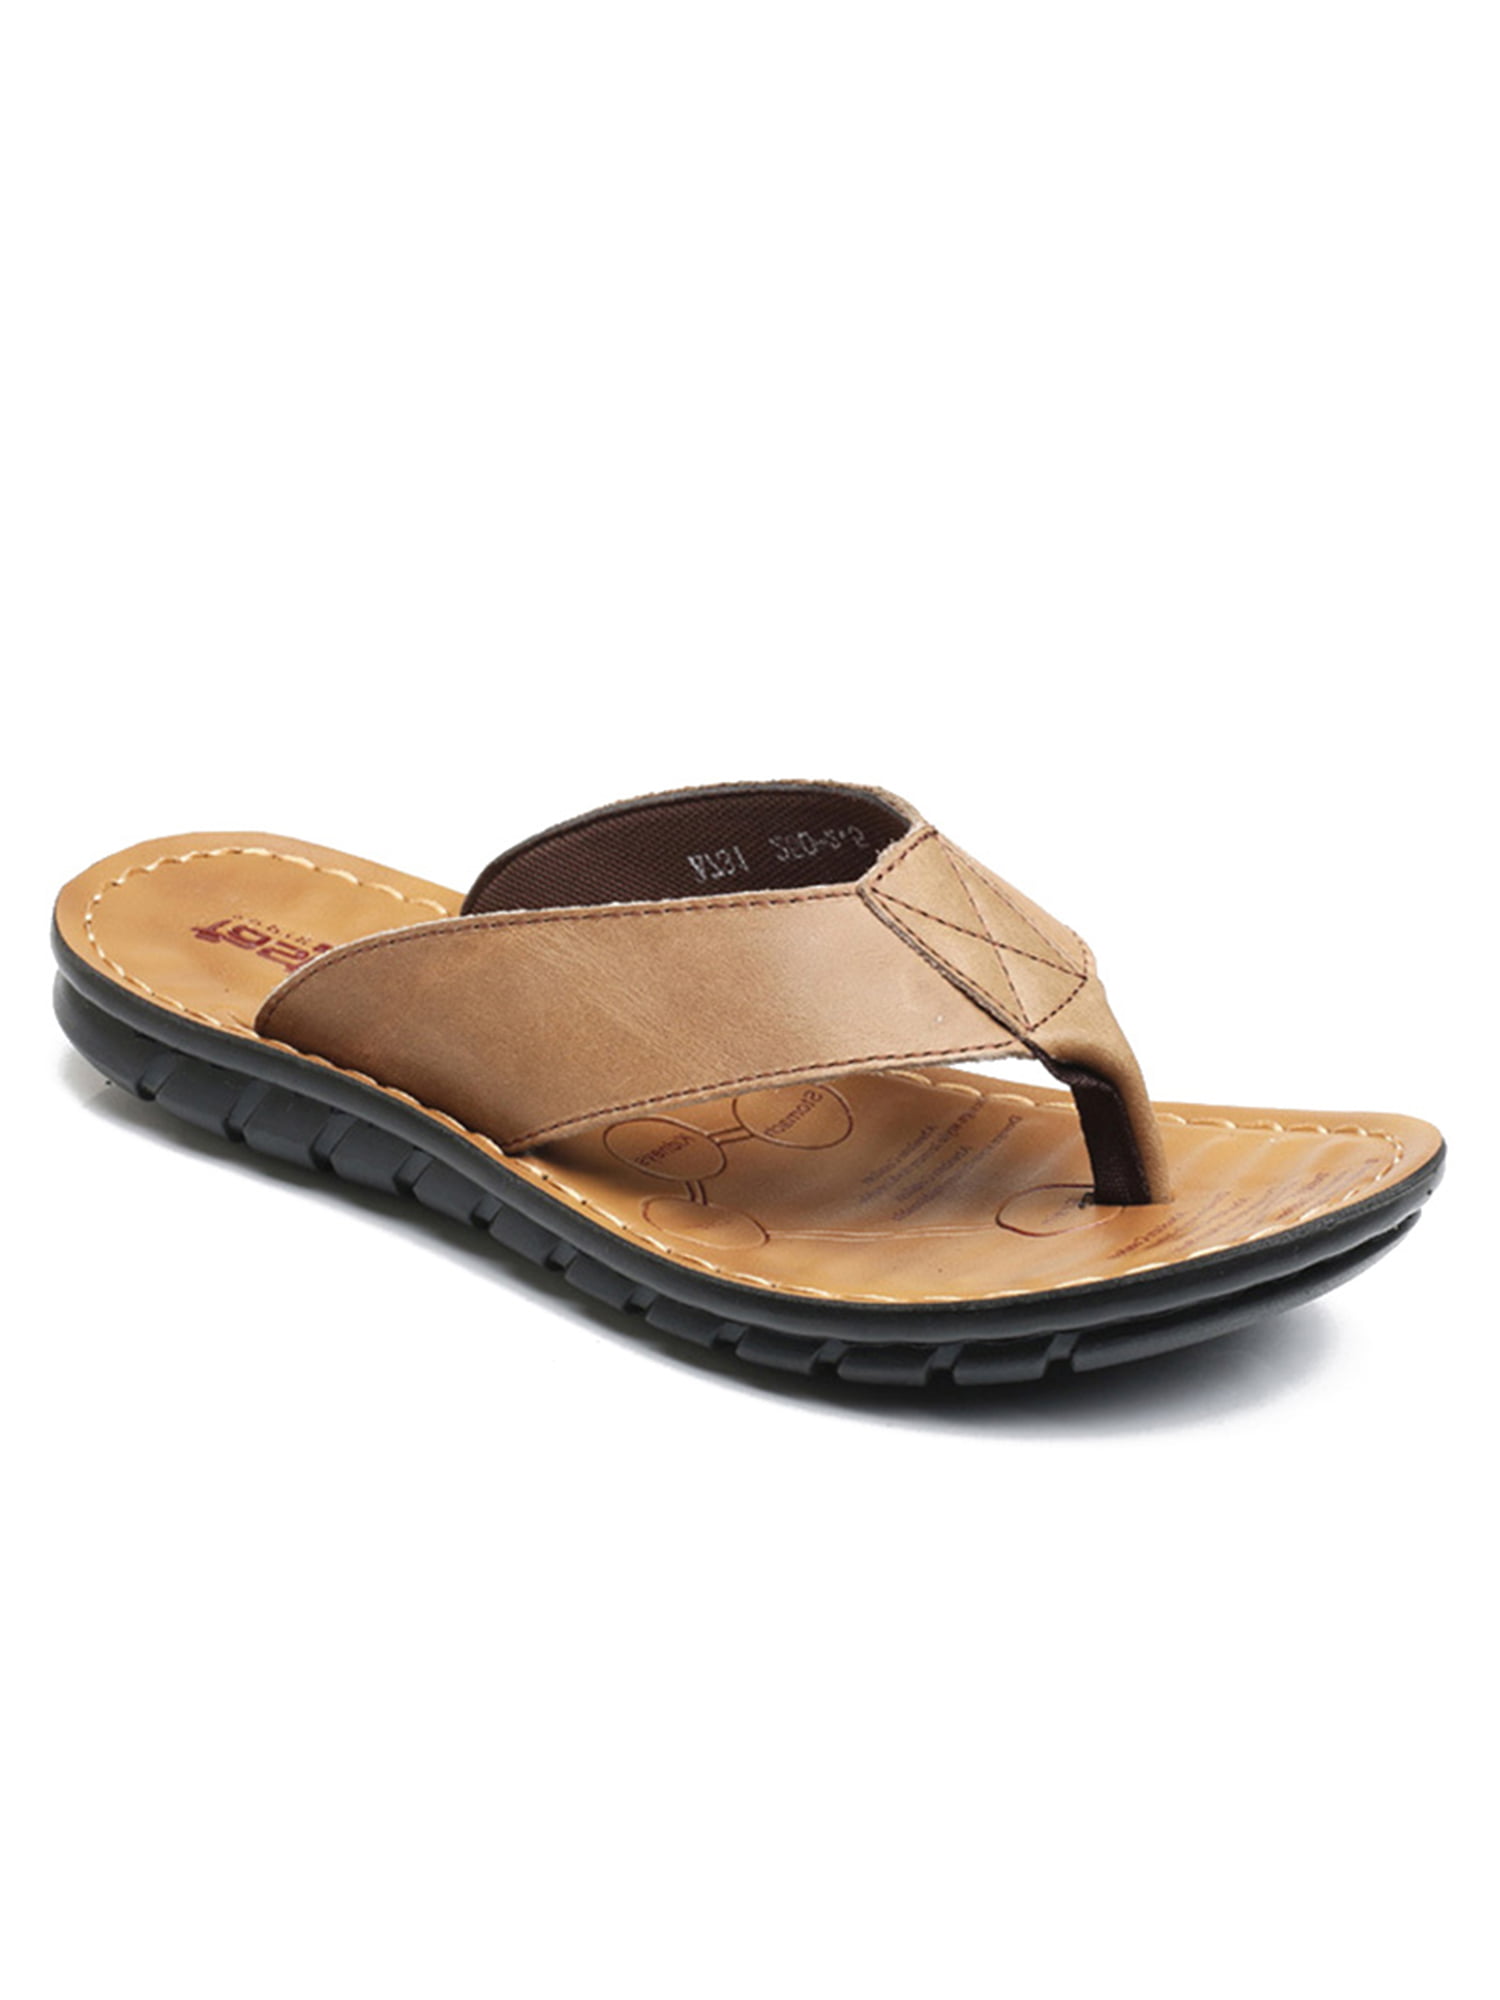 Lucky Brand Mens Blue Brown Woven Lennon Thong Flip Flop Sandals Sz 9 M 8732-4 